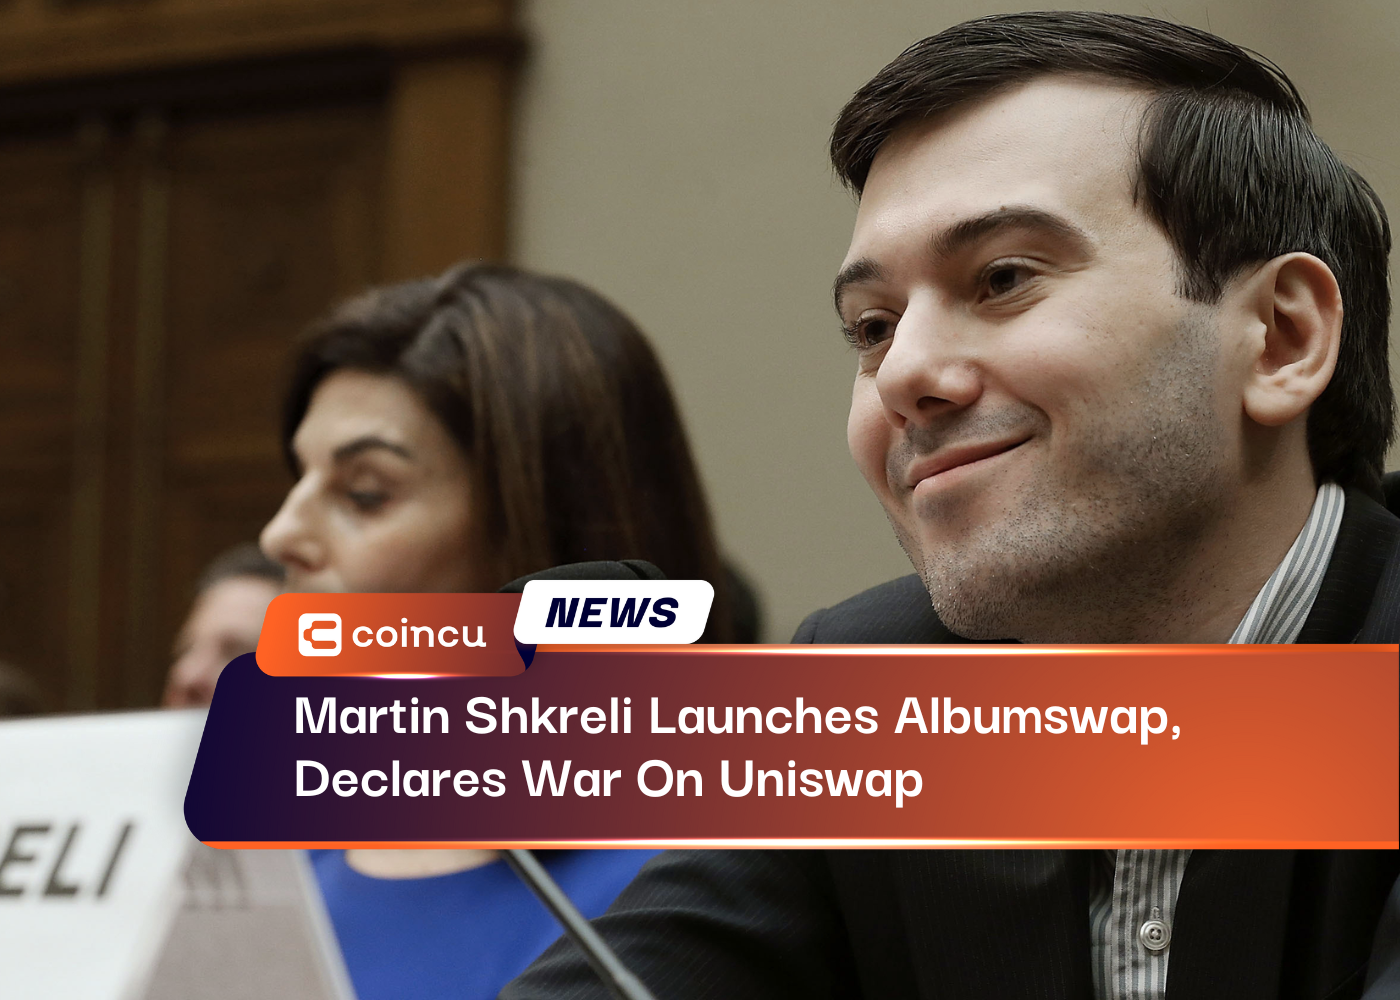 Martin Shkreli Launches Albumswap, Declares War On Uniswap